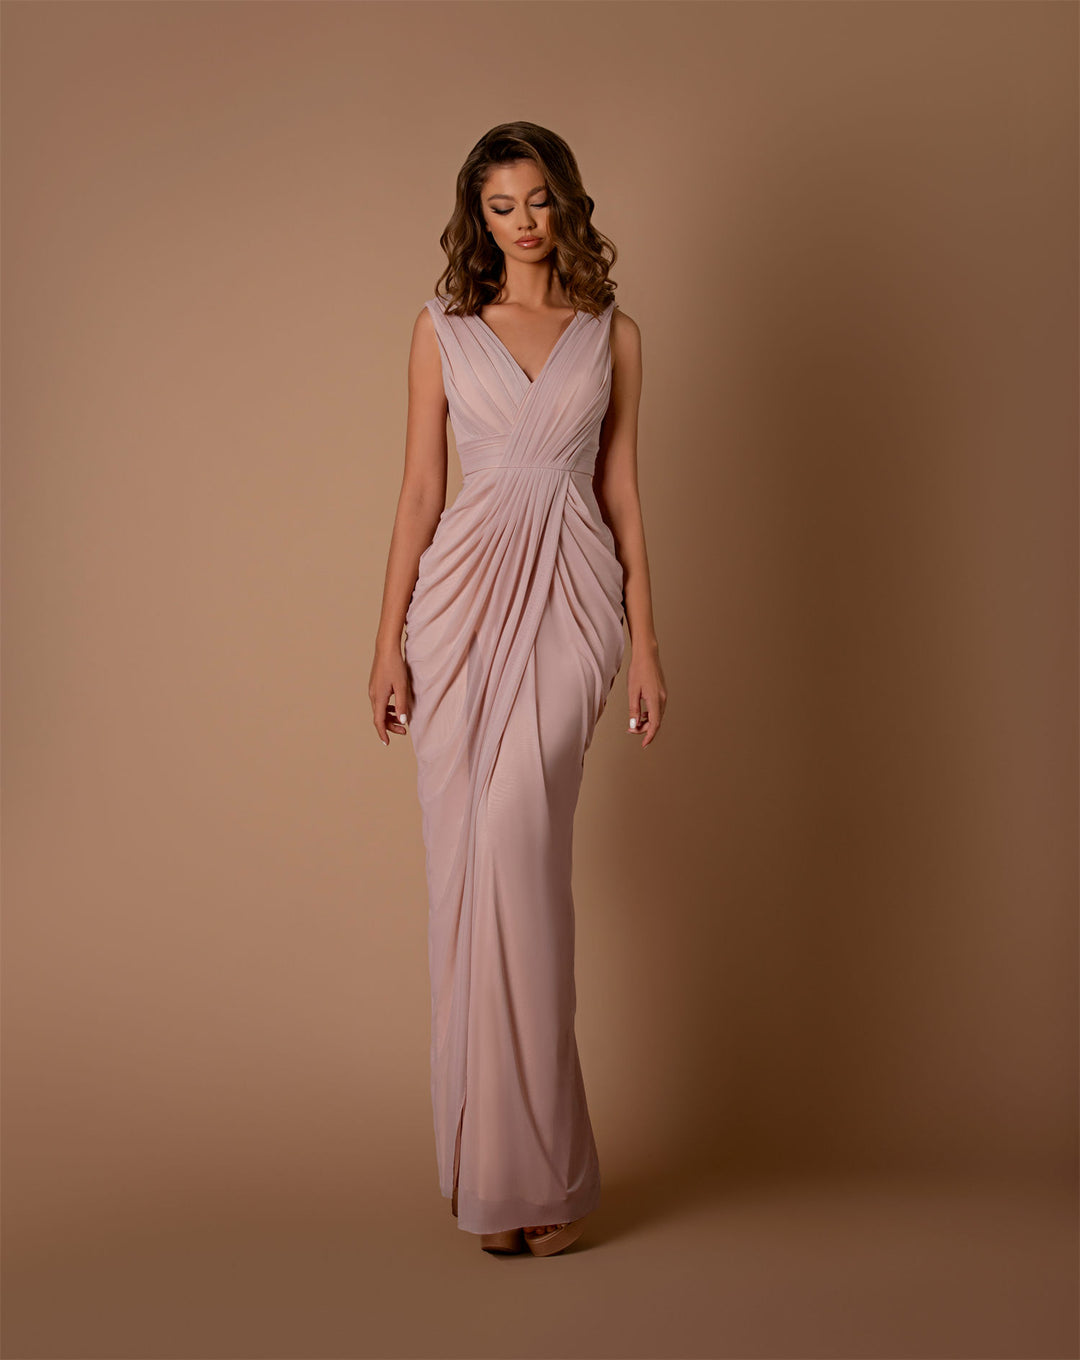 Grecia Dress by Nicoletta NB1001 - ElissaJay Boutique